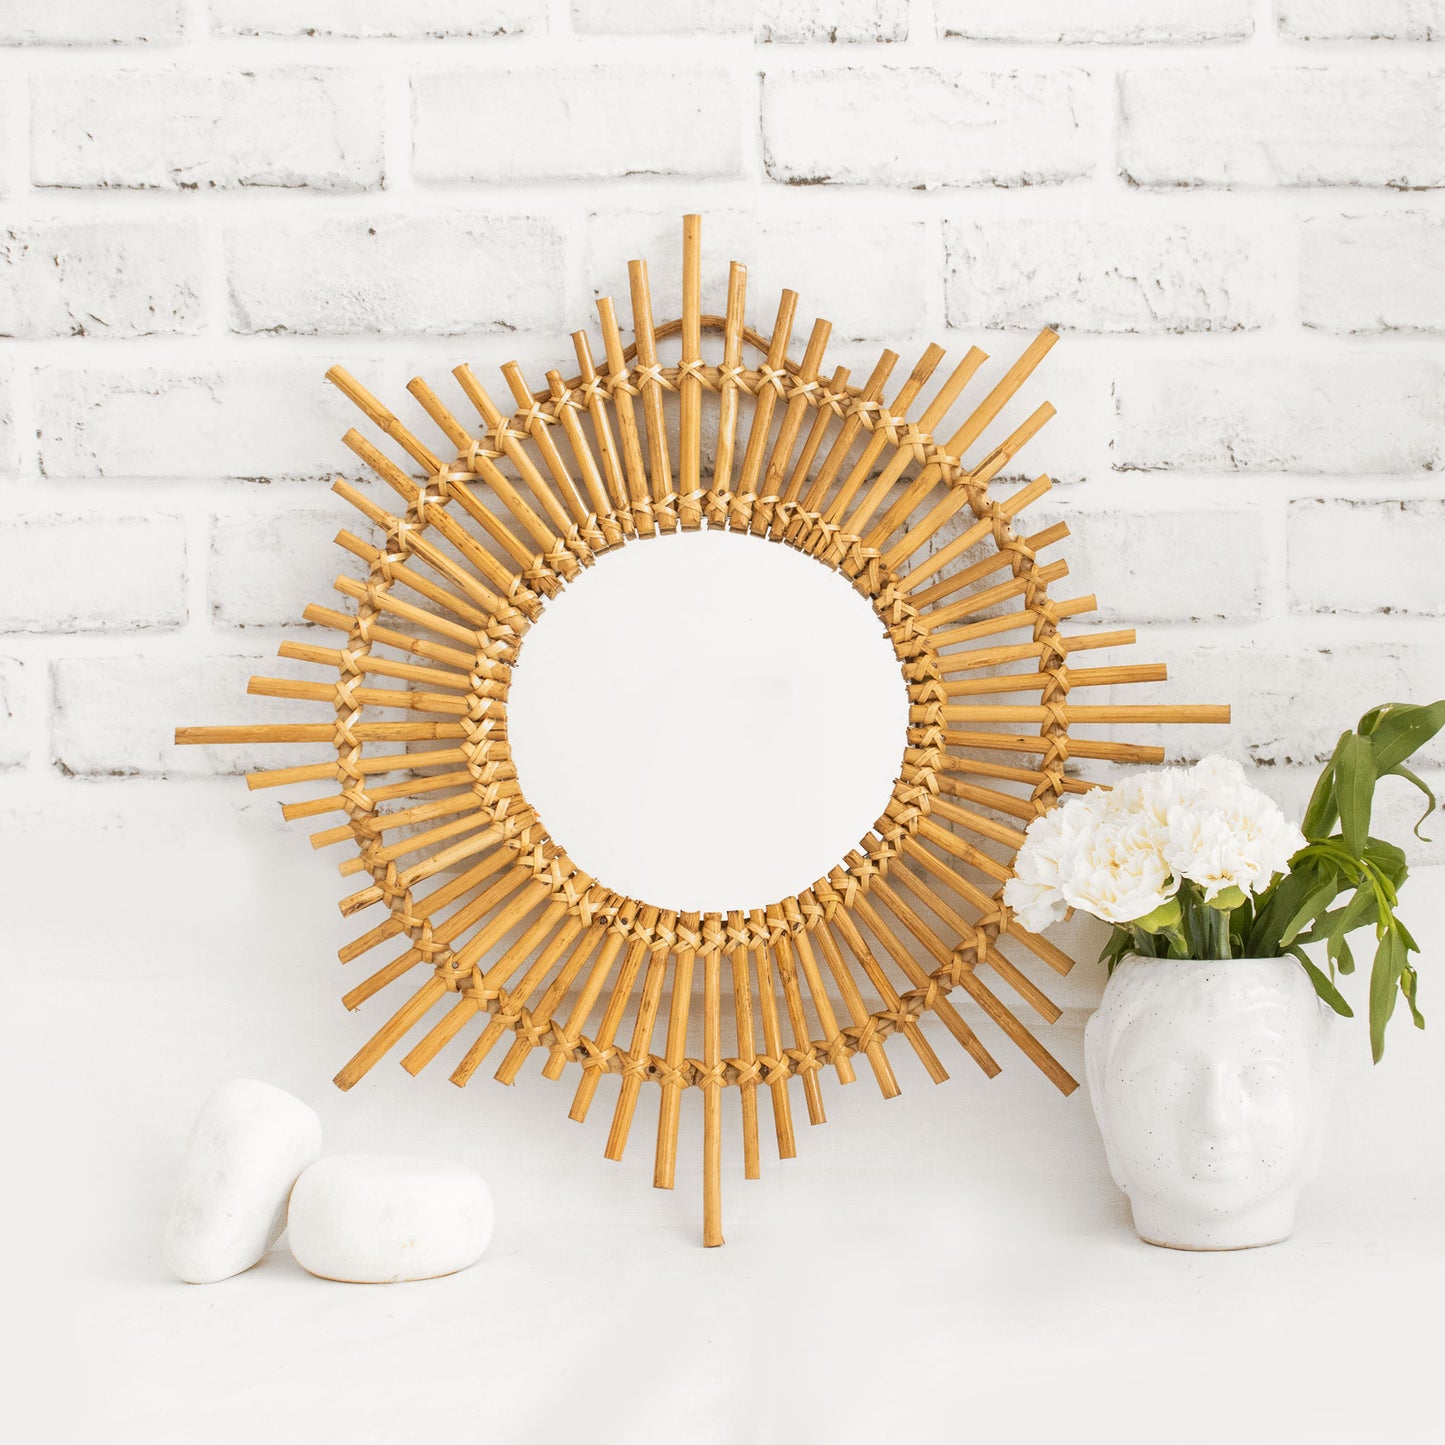 "Bring that sunshine"- Cane wall mirror